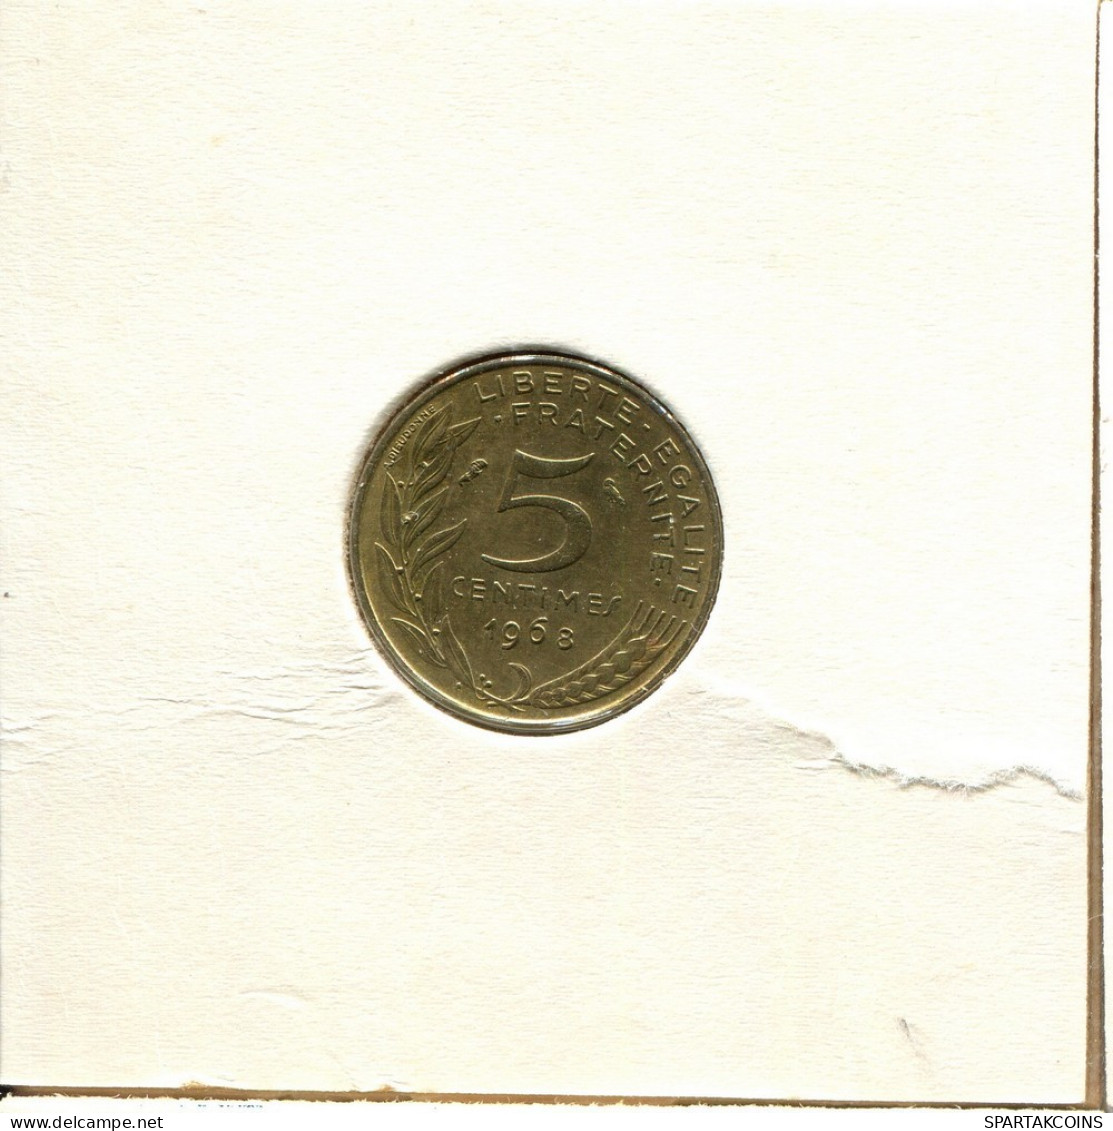 5 CENTIMES 1968 FRANCIA FRANCE Moneda #BB409.E.A - 5 Centimes